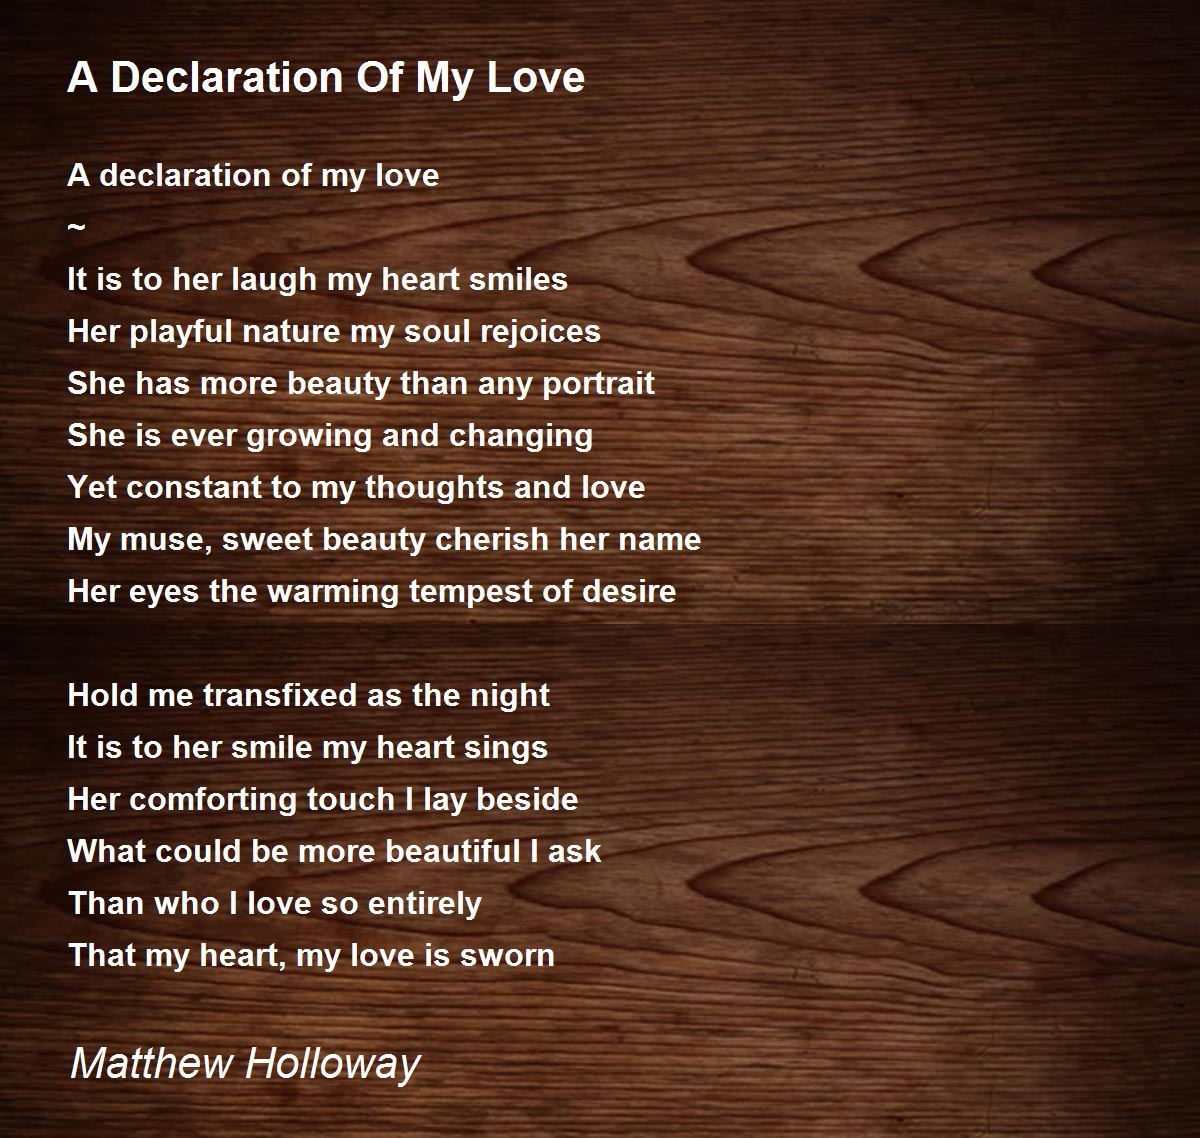 https://www.poemhunter.com/i/poem_images/981/a-declaration-of-my-love.jpg